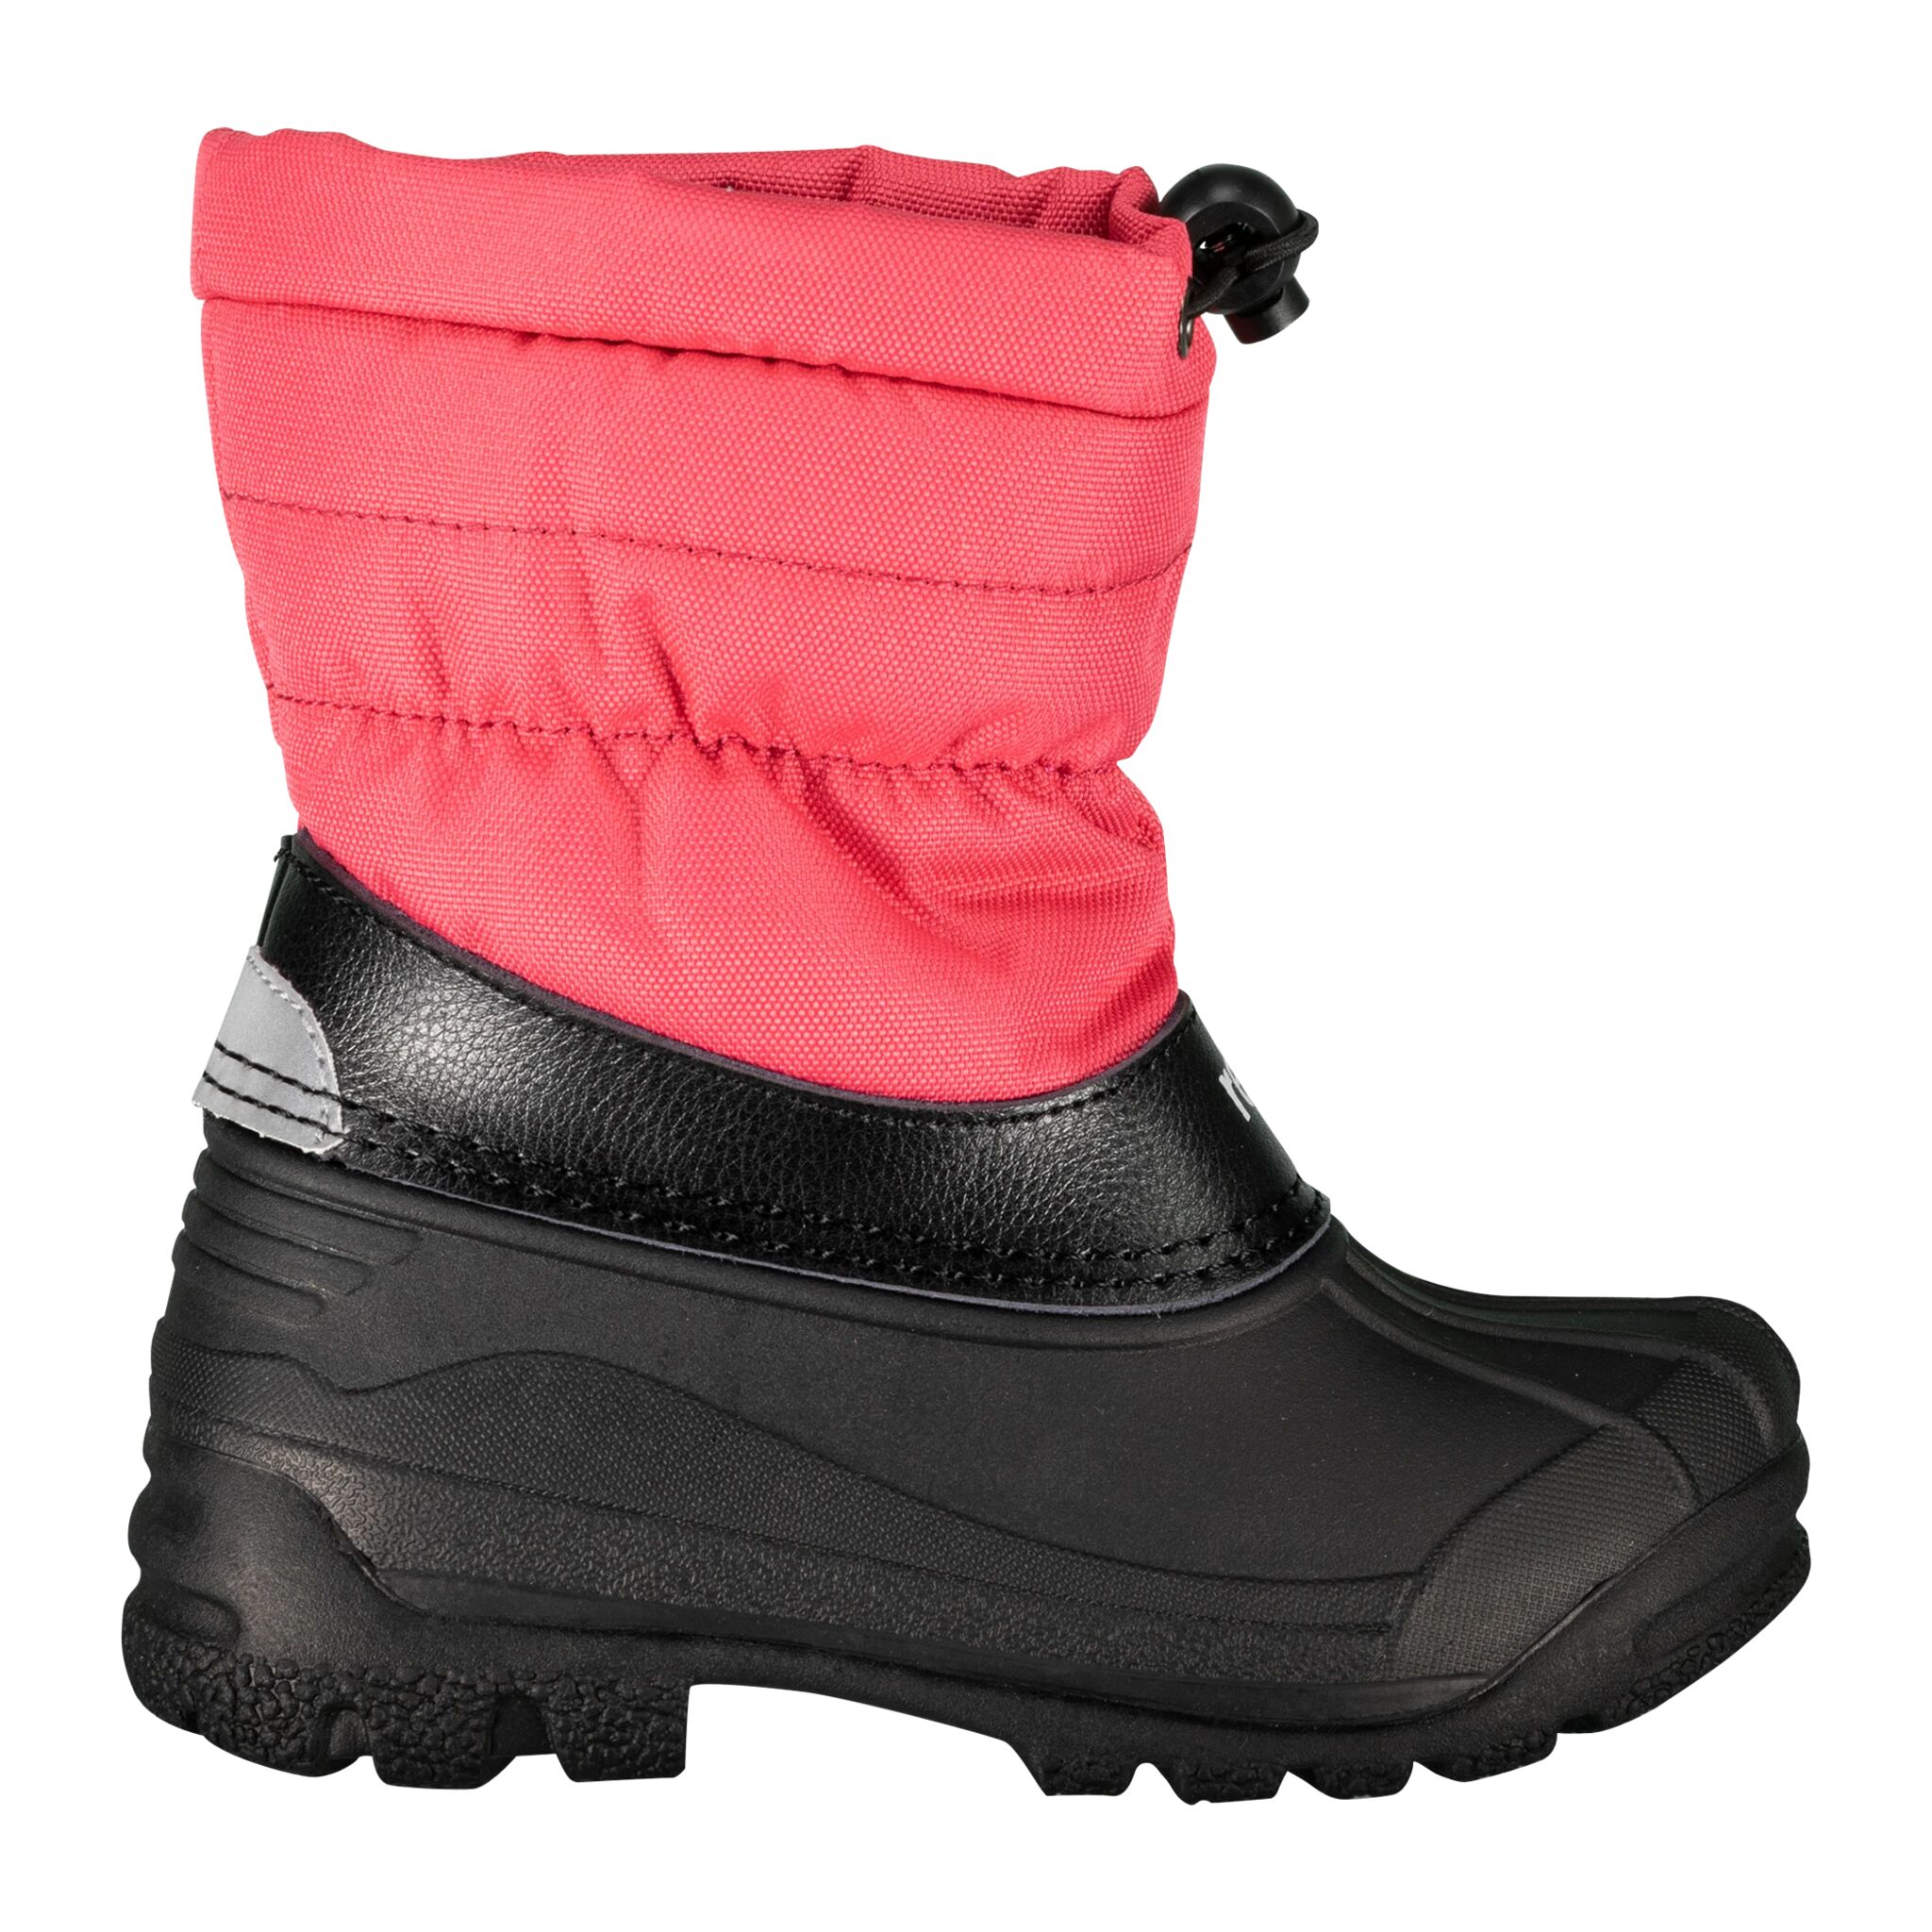 Reima Winter boots Nefar, vintersko barn 28 Azalea Pink